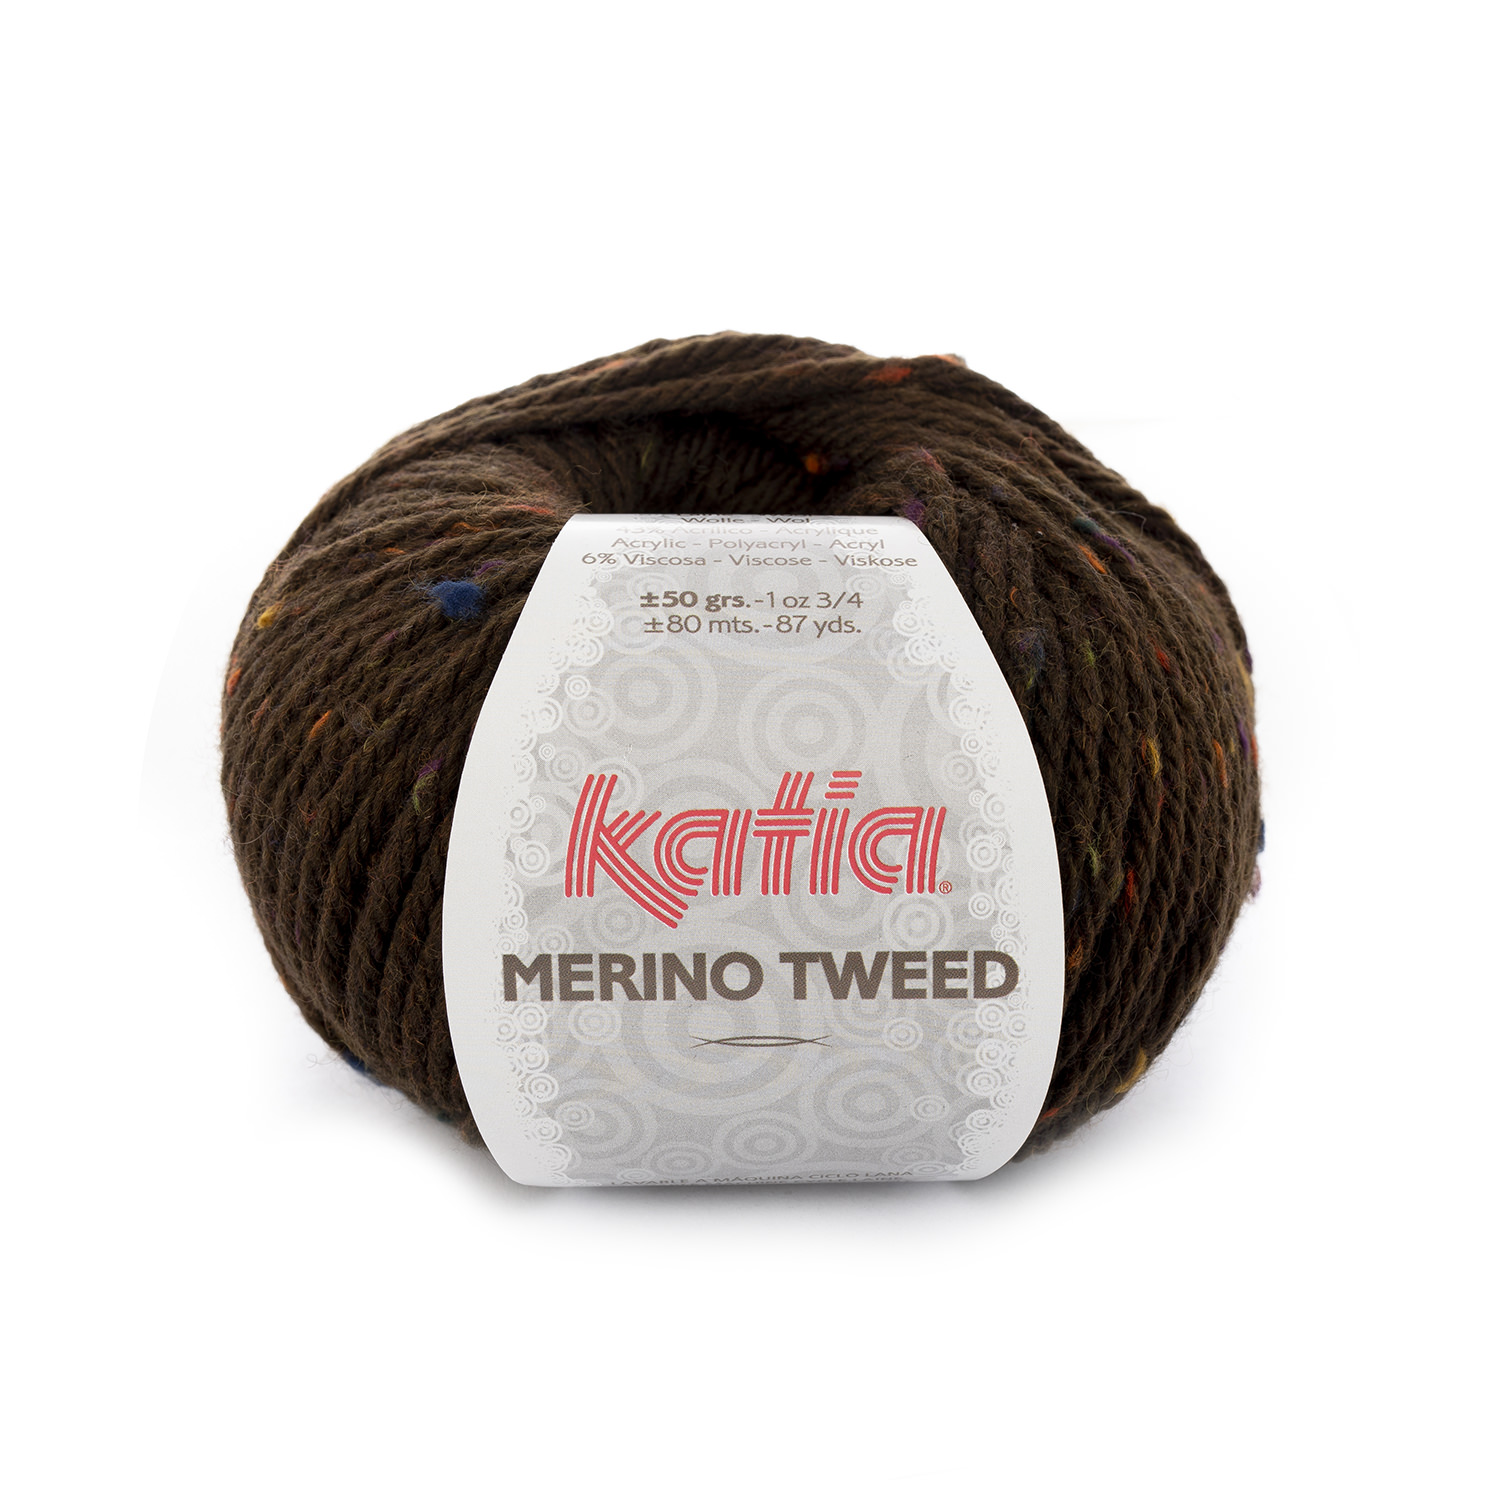 Katia Merino Tweed - Csokoládé